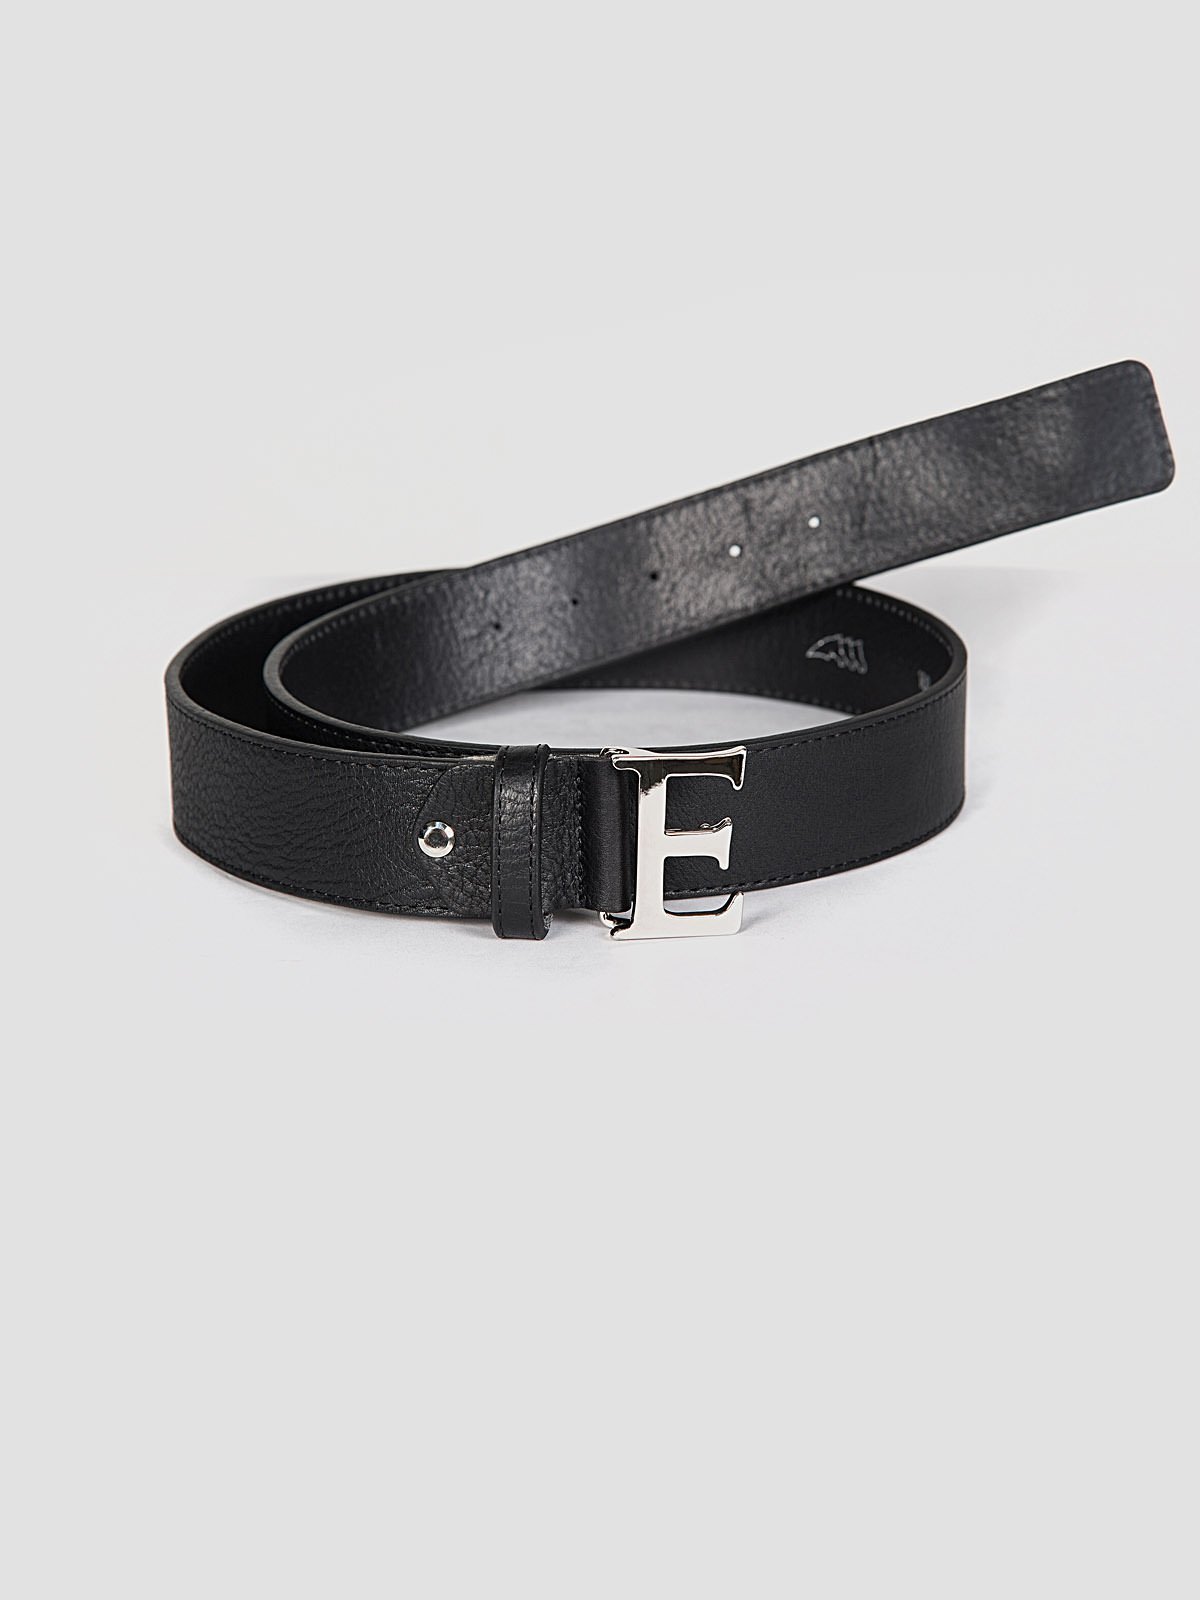 Equiline Betta leather belt in black